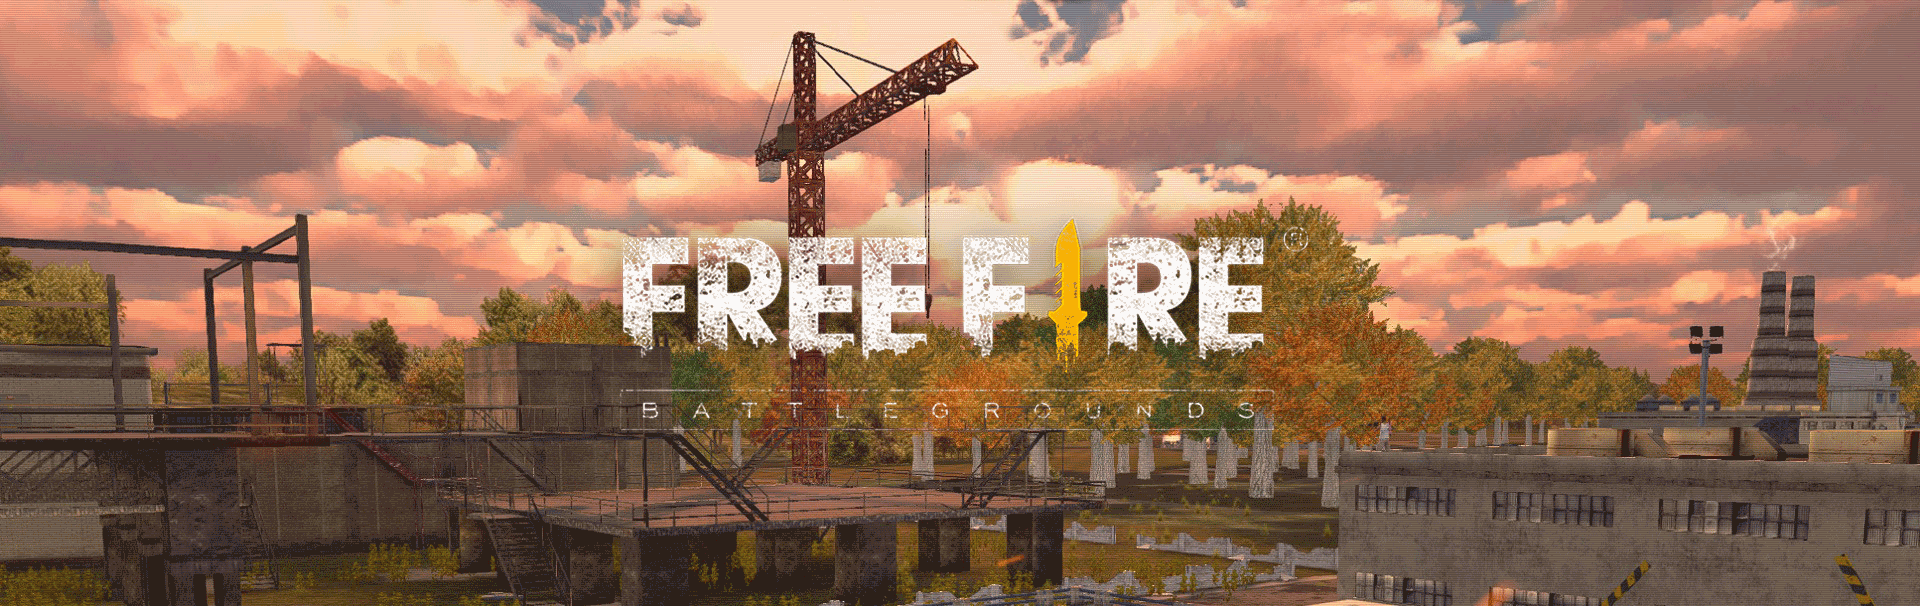 Free Fire Battleground Wallpaper Free Free Fire